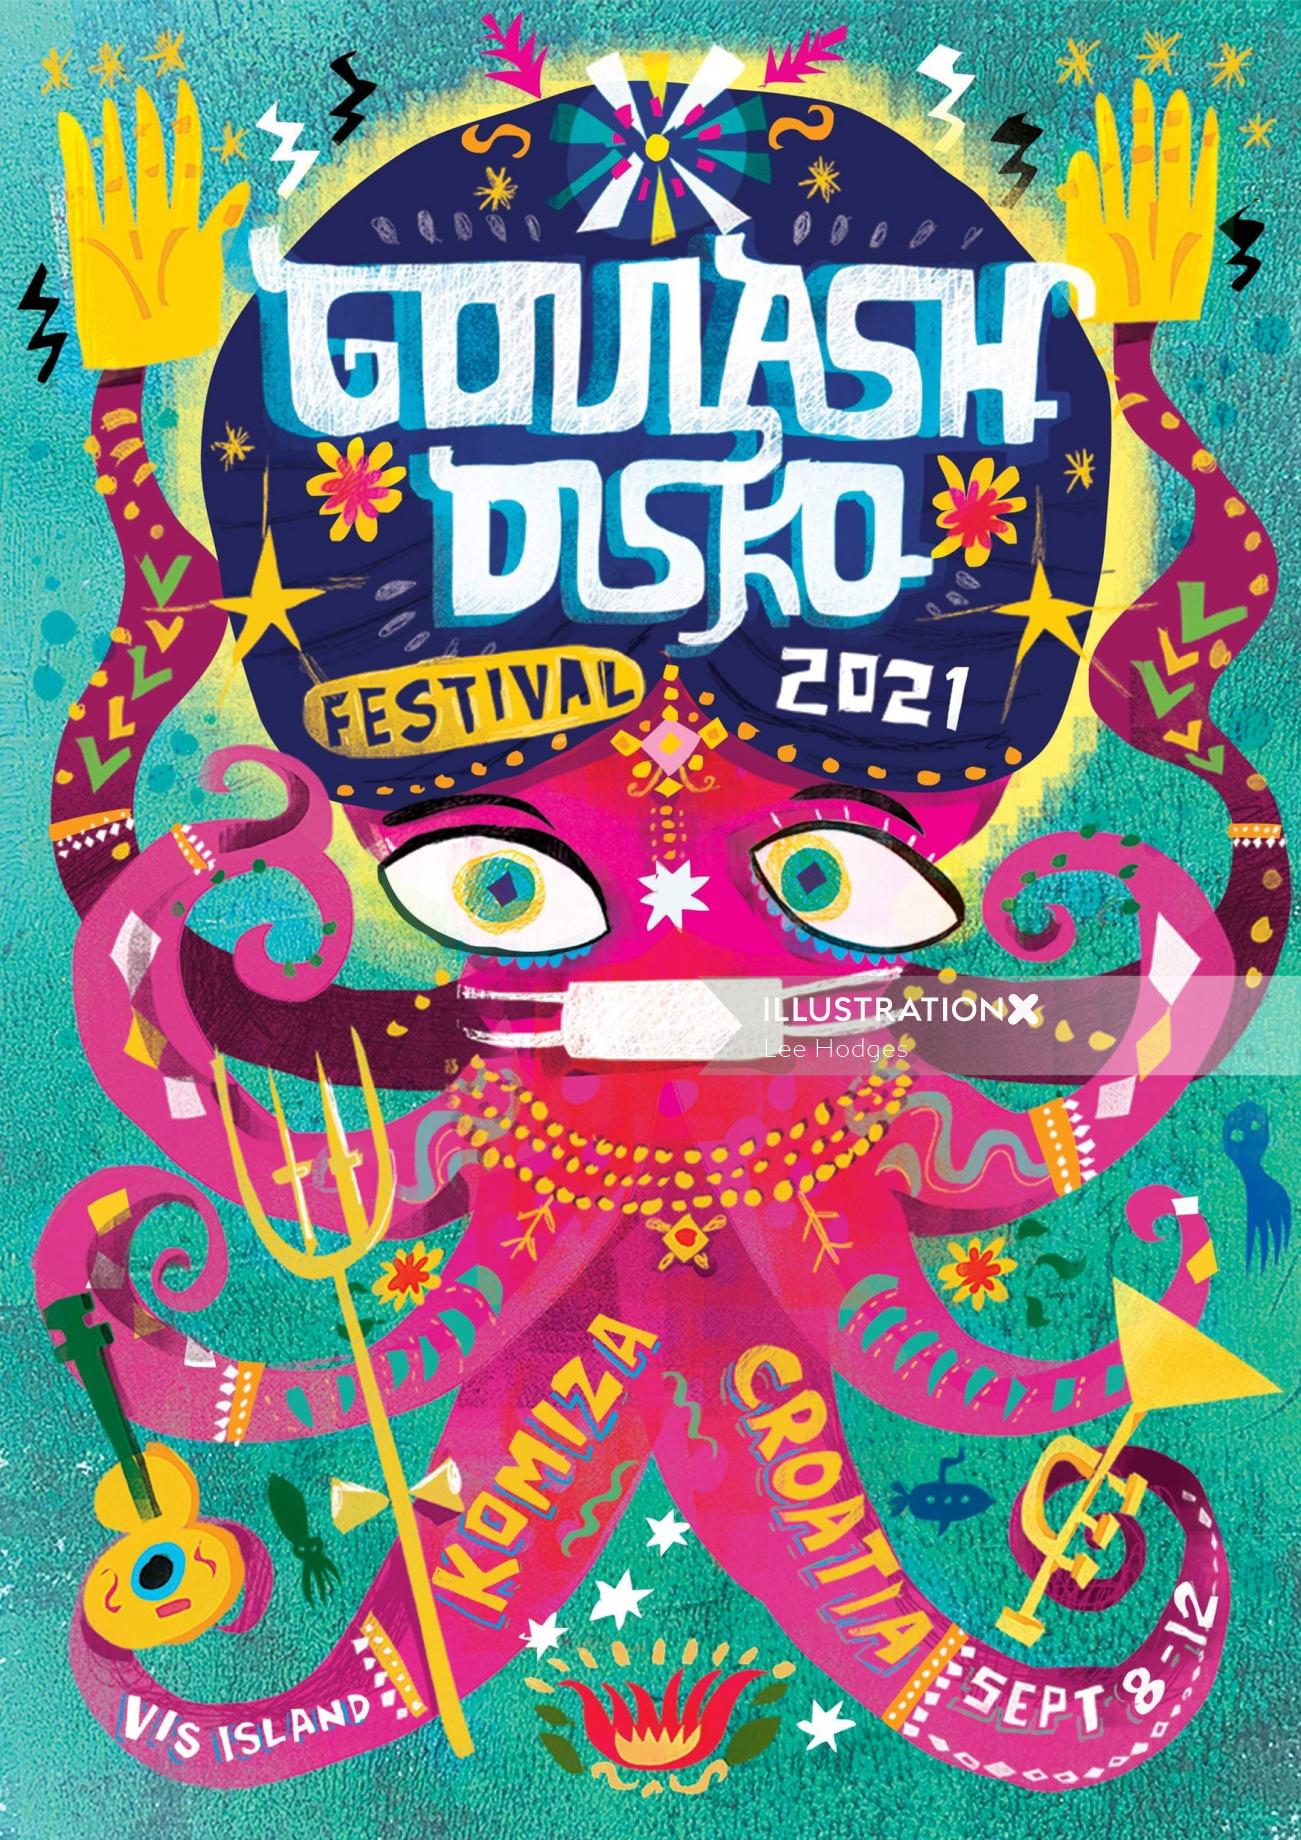 Arte del cartel del Goulash Disko Festival 2021